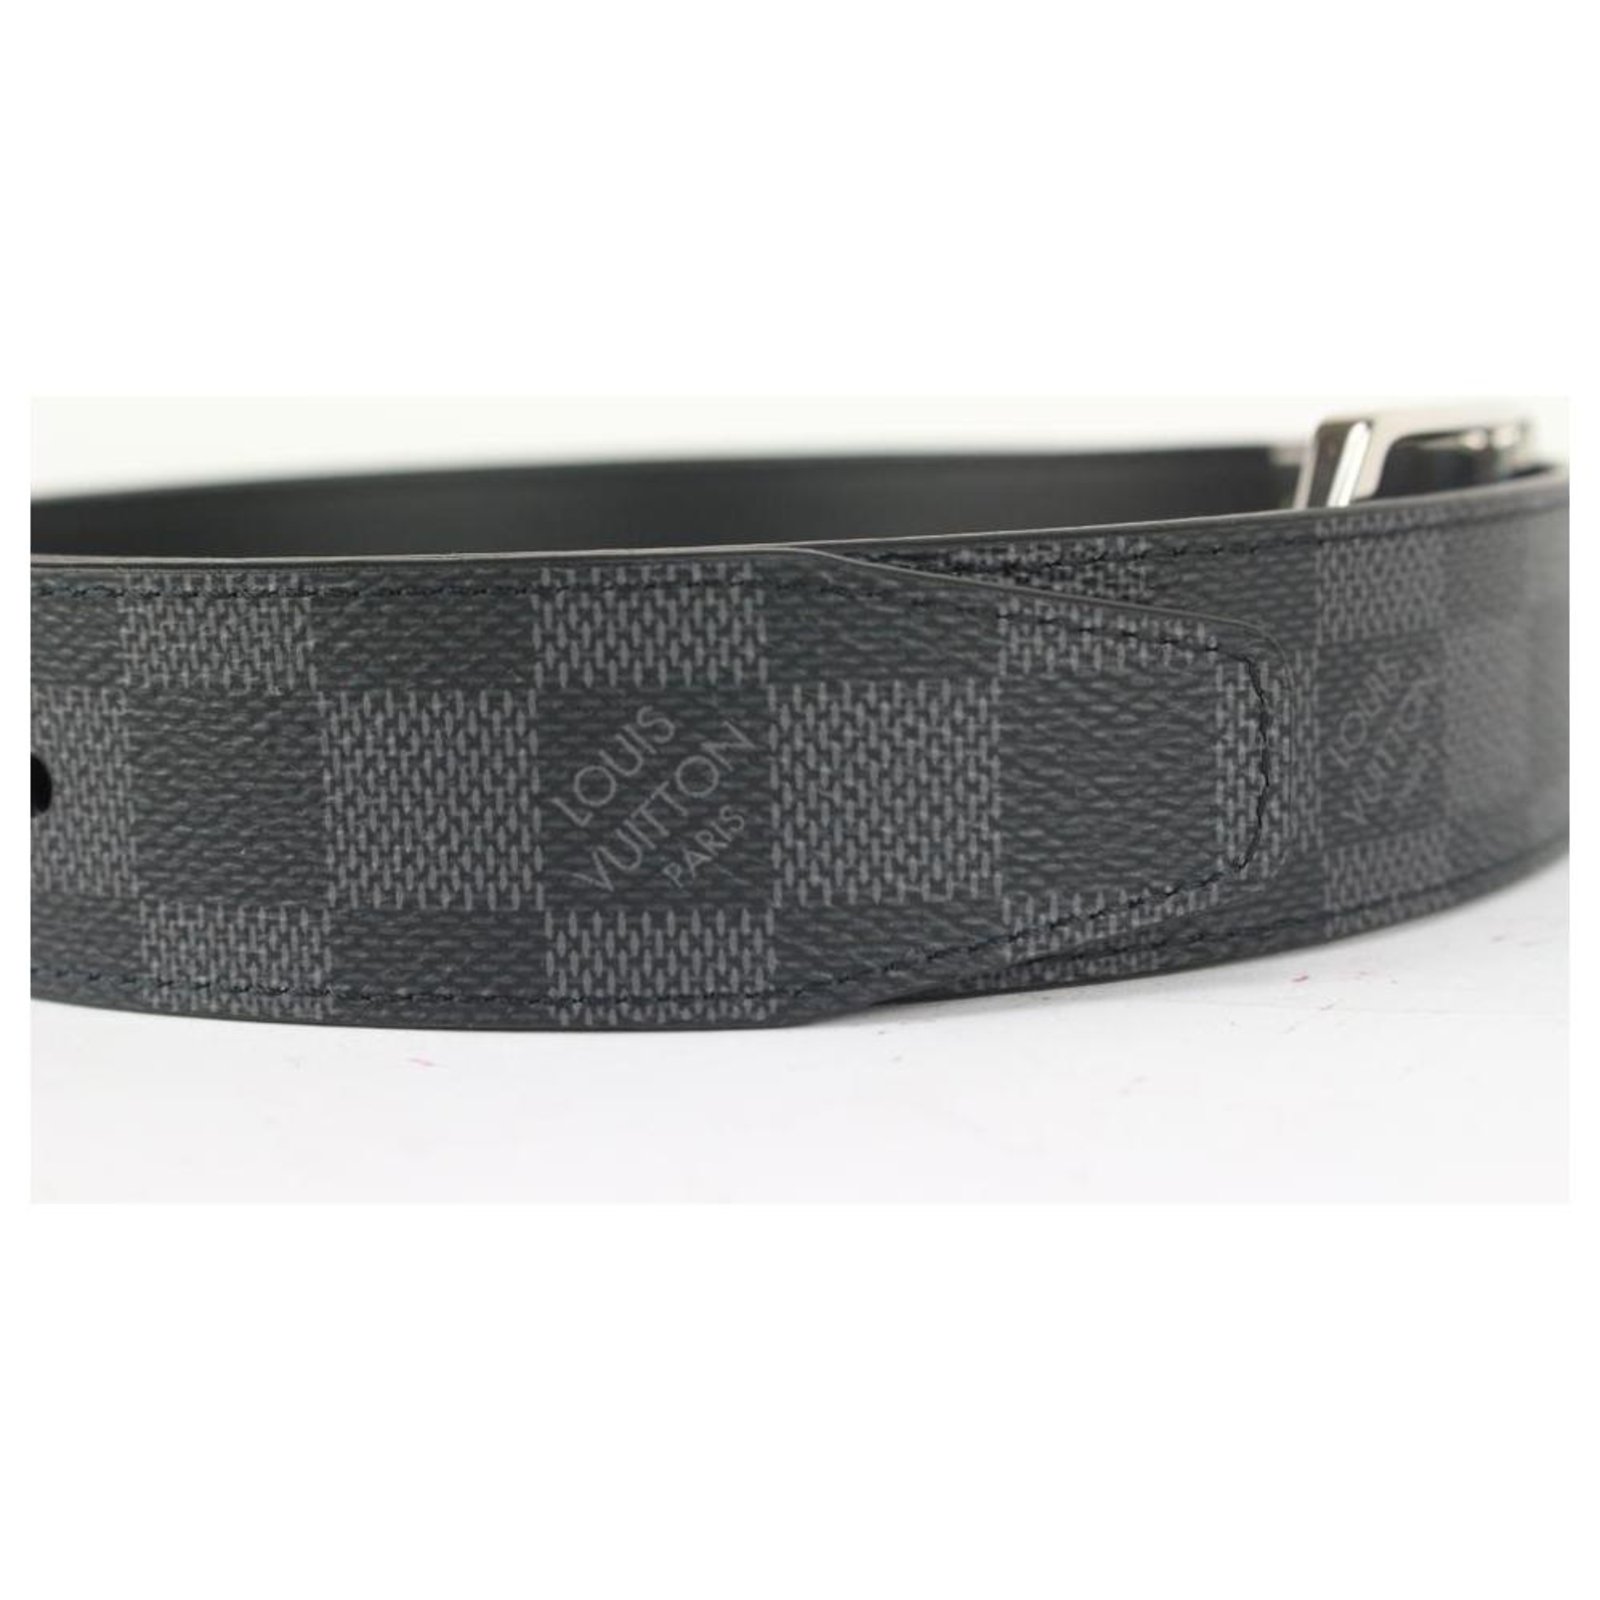 Louis Vuitton Slender 35mm Reversible Belt, Men's Fashion, Watches